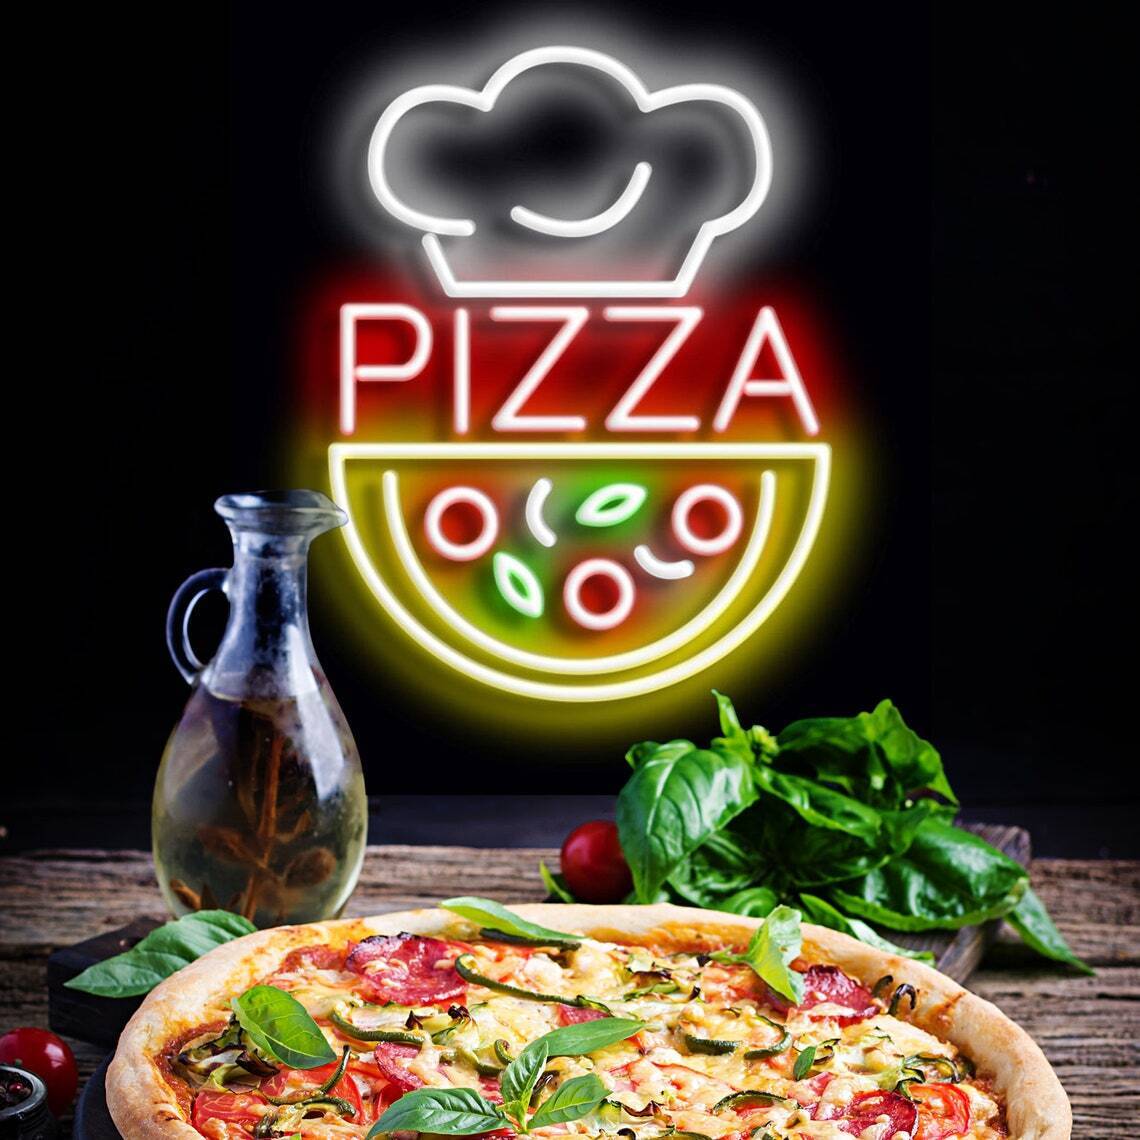 Free Design Pizza Custom Neon Sign Neon Light Kitchen Fast Food Restaurant Decor